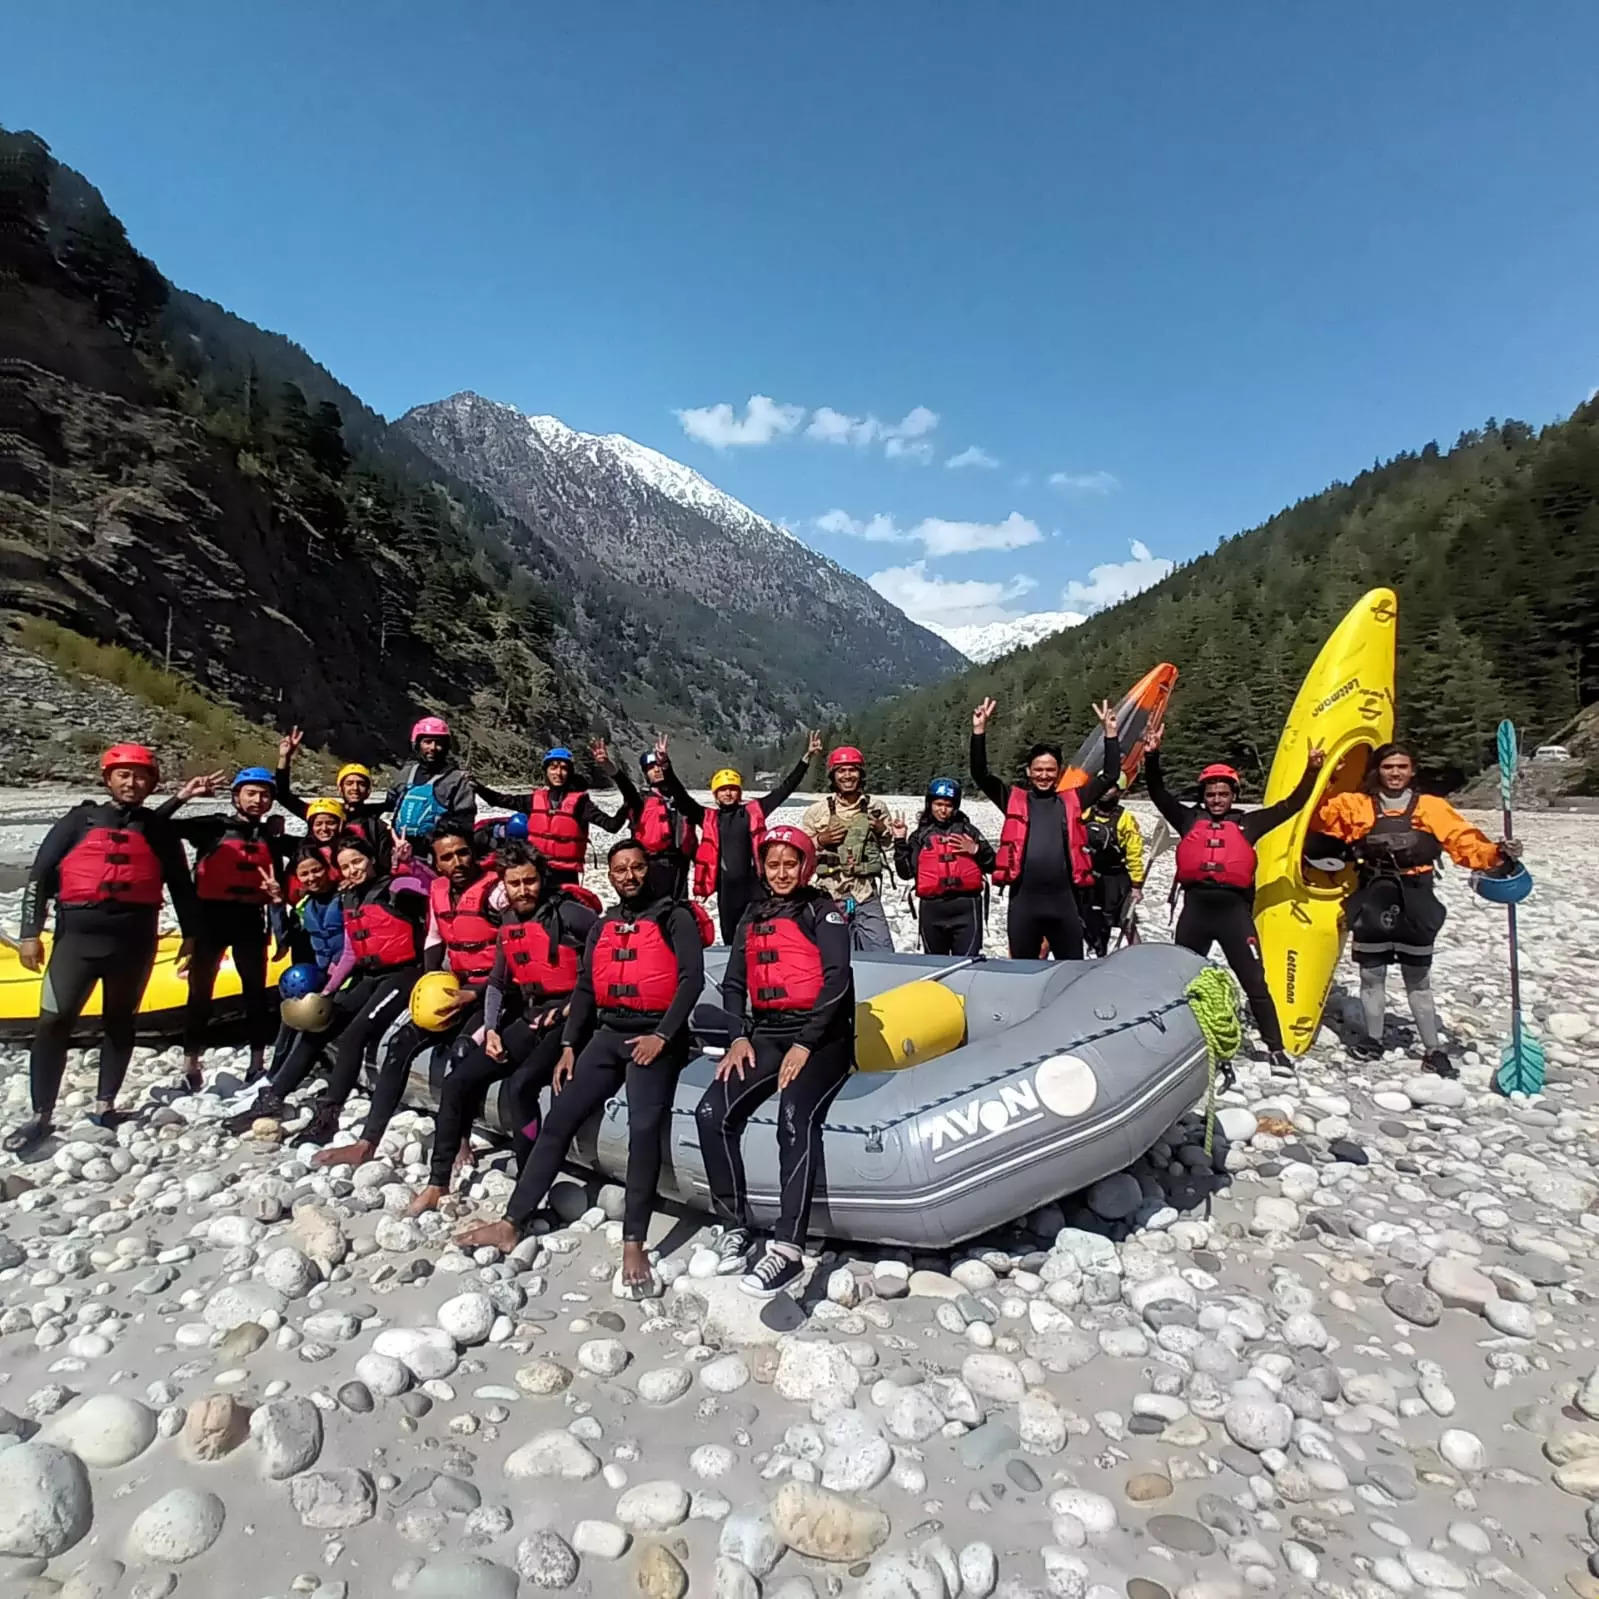 Uttarakhand tourism introduces river rafting on Bhagirathi in Harsil, ET TravelWorld